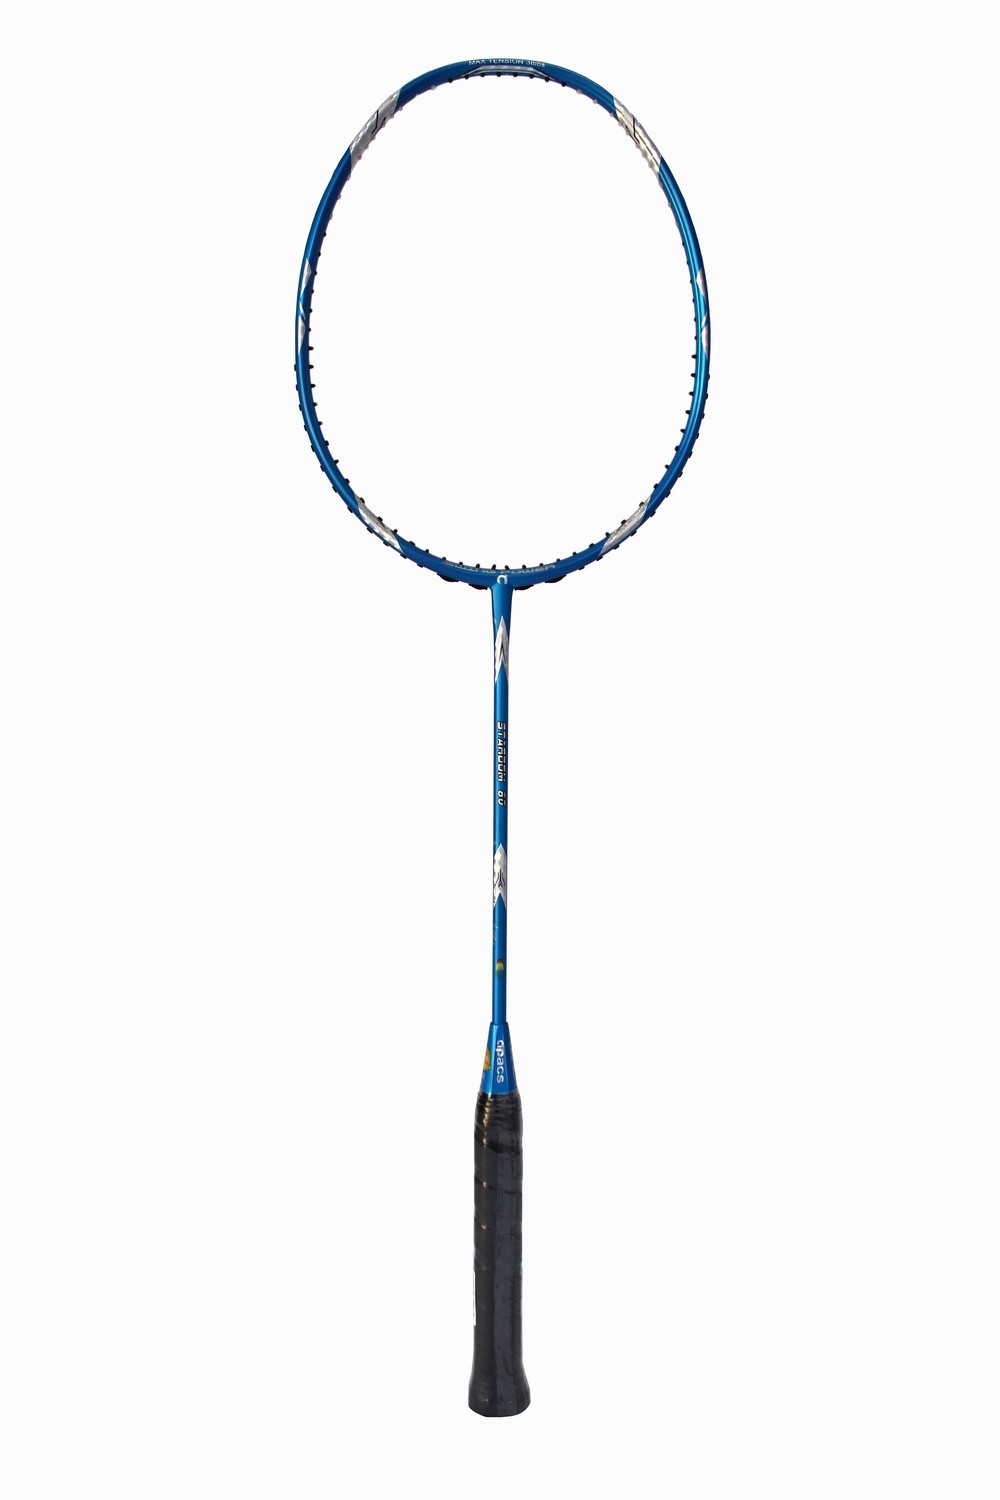 Apacs Stardom 80 Blue Badminton Racquet